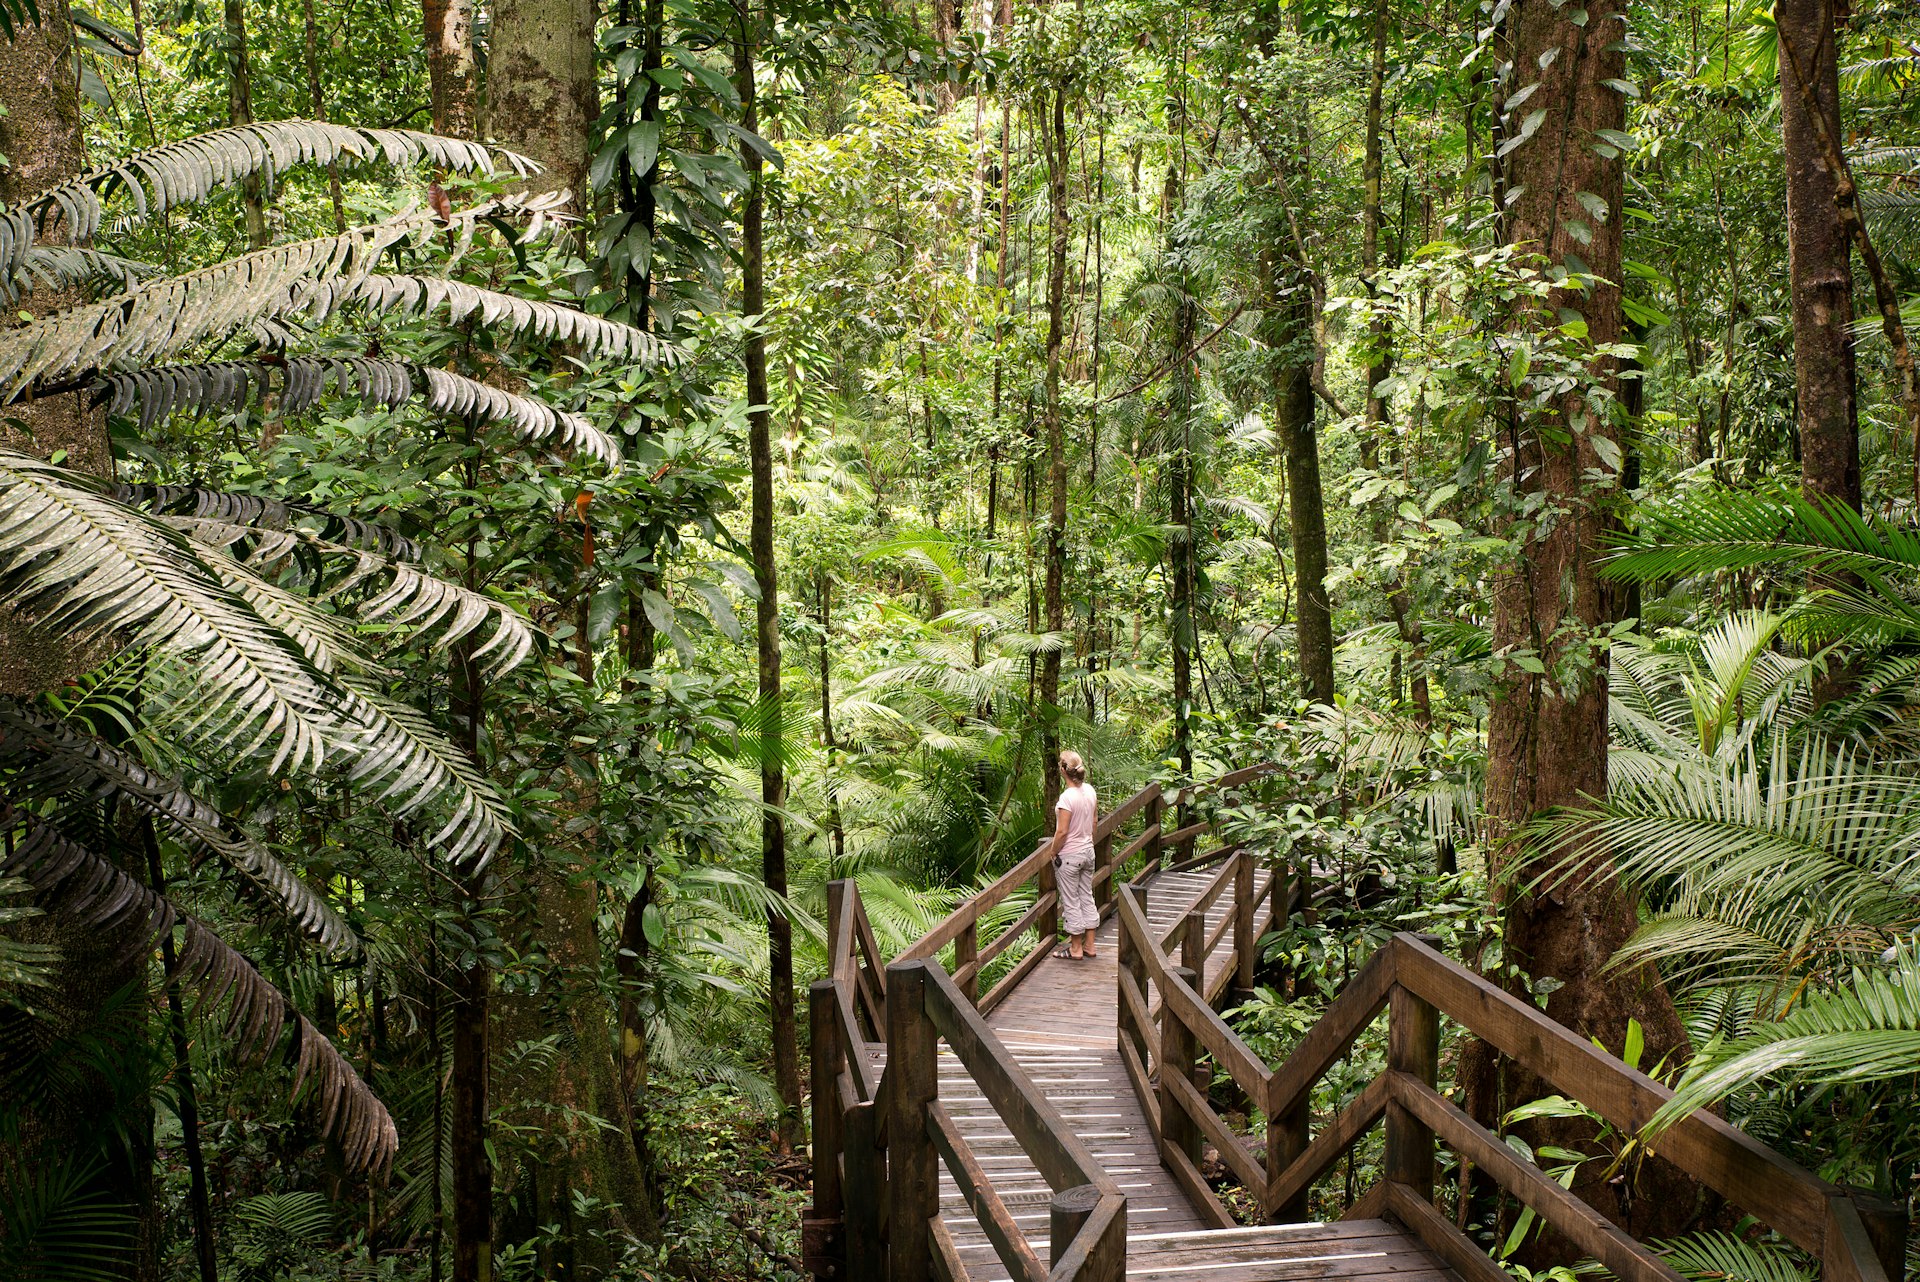 A wooden boardwalk winds its way through the treetops of Daintree Rainforest